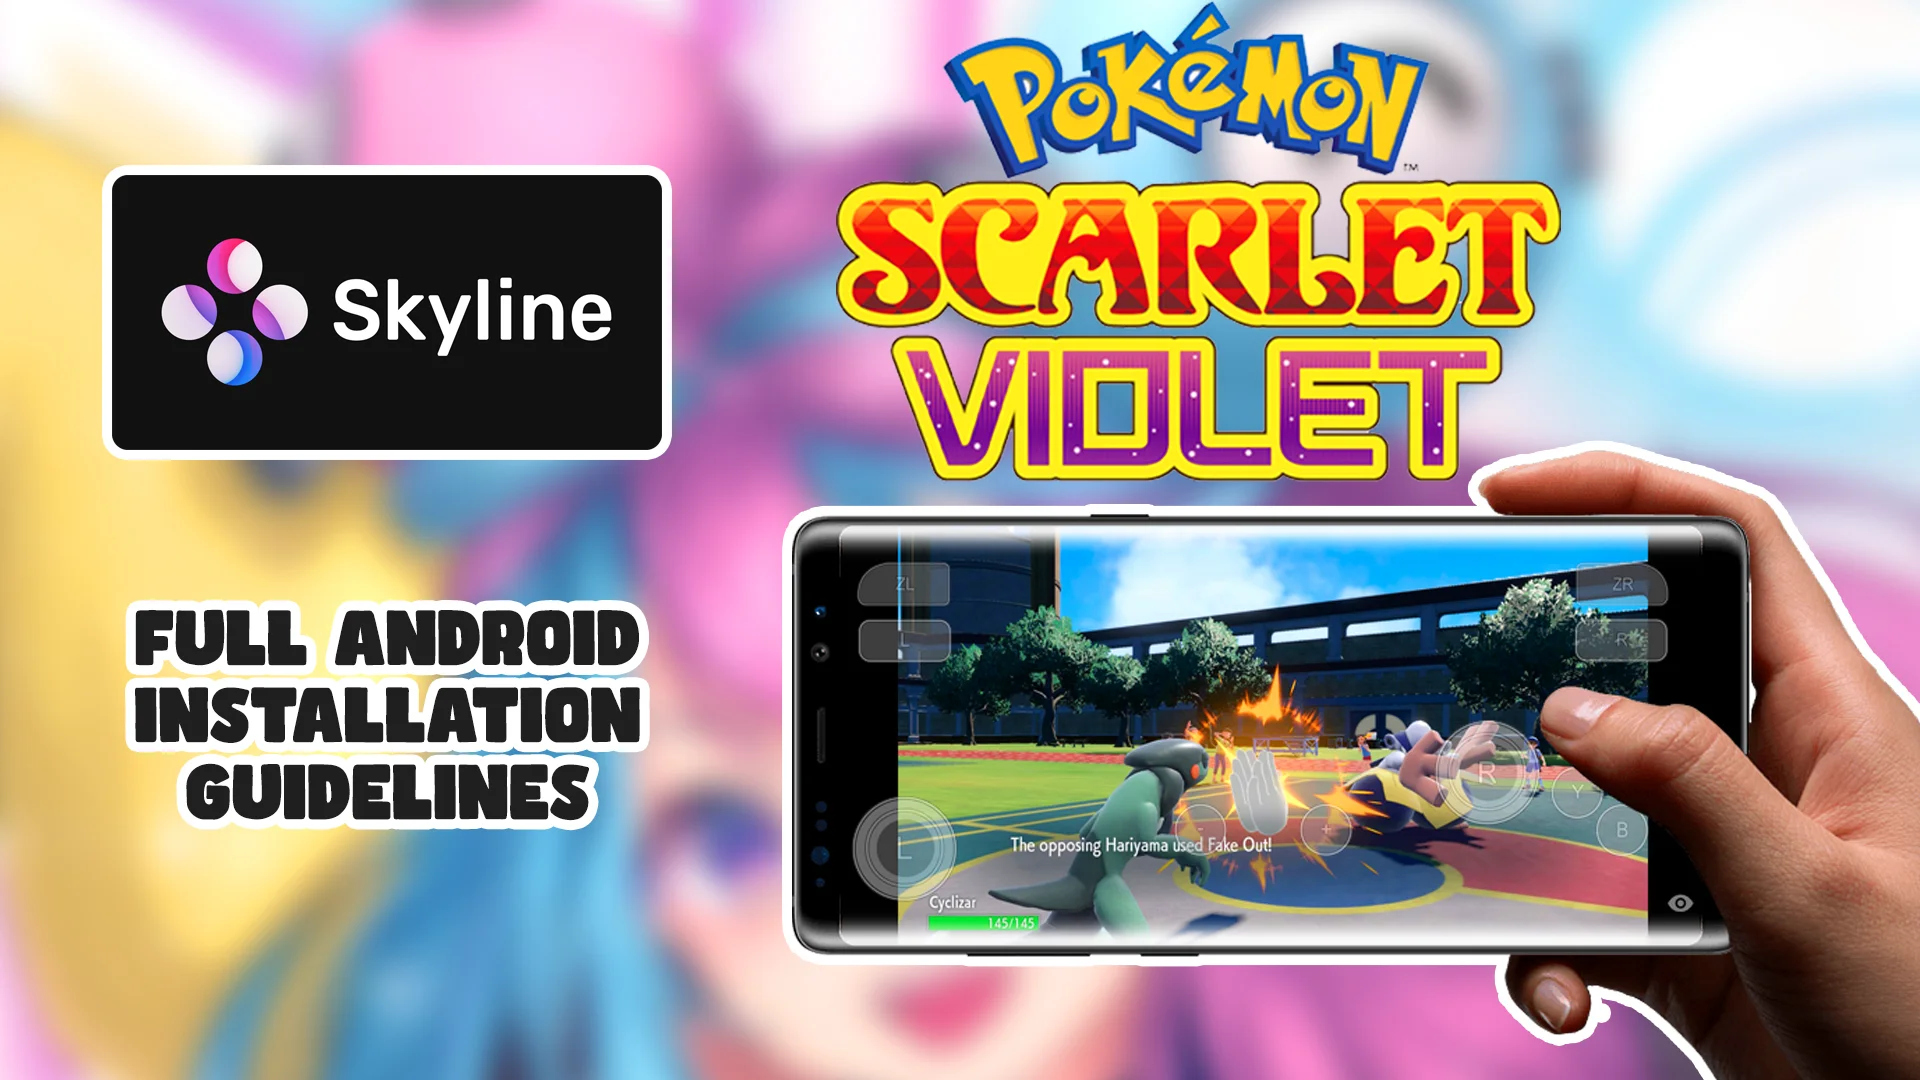 Pokémon Scarlet and Violet APK Mobile